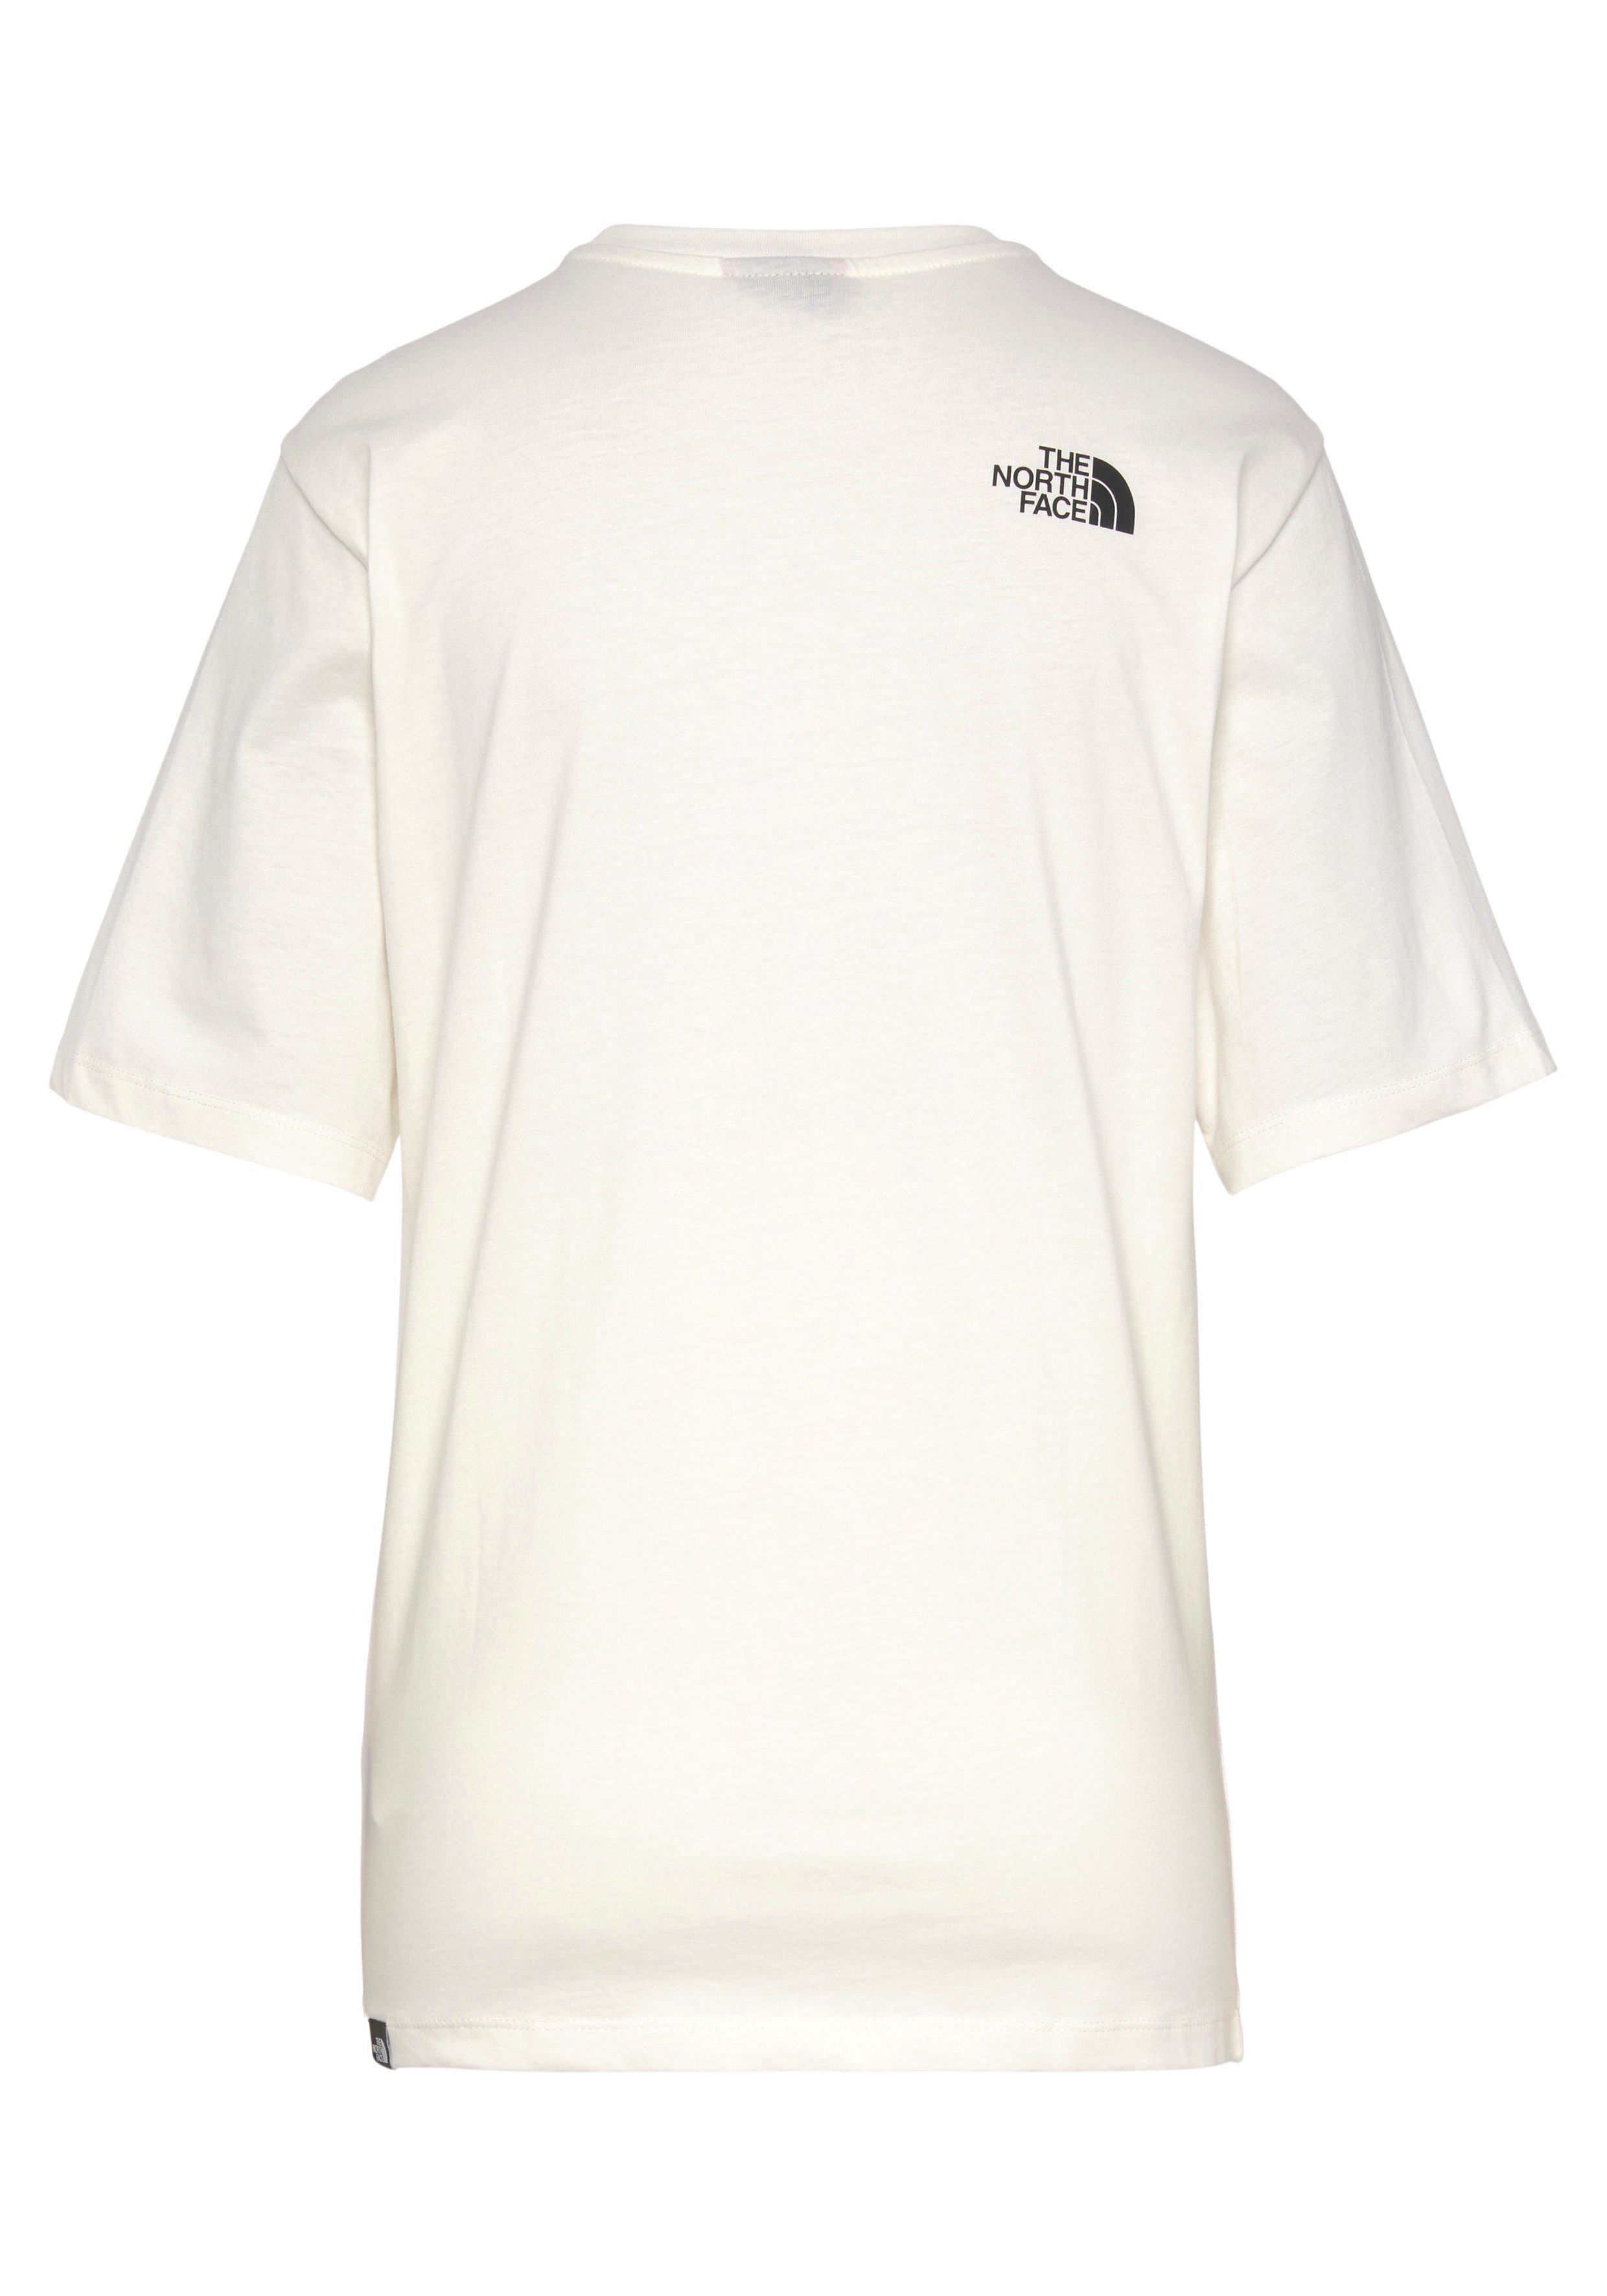 der mit Brust W TEE white North Logodruck Face EASY auf T-Shirt RELAXED The